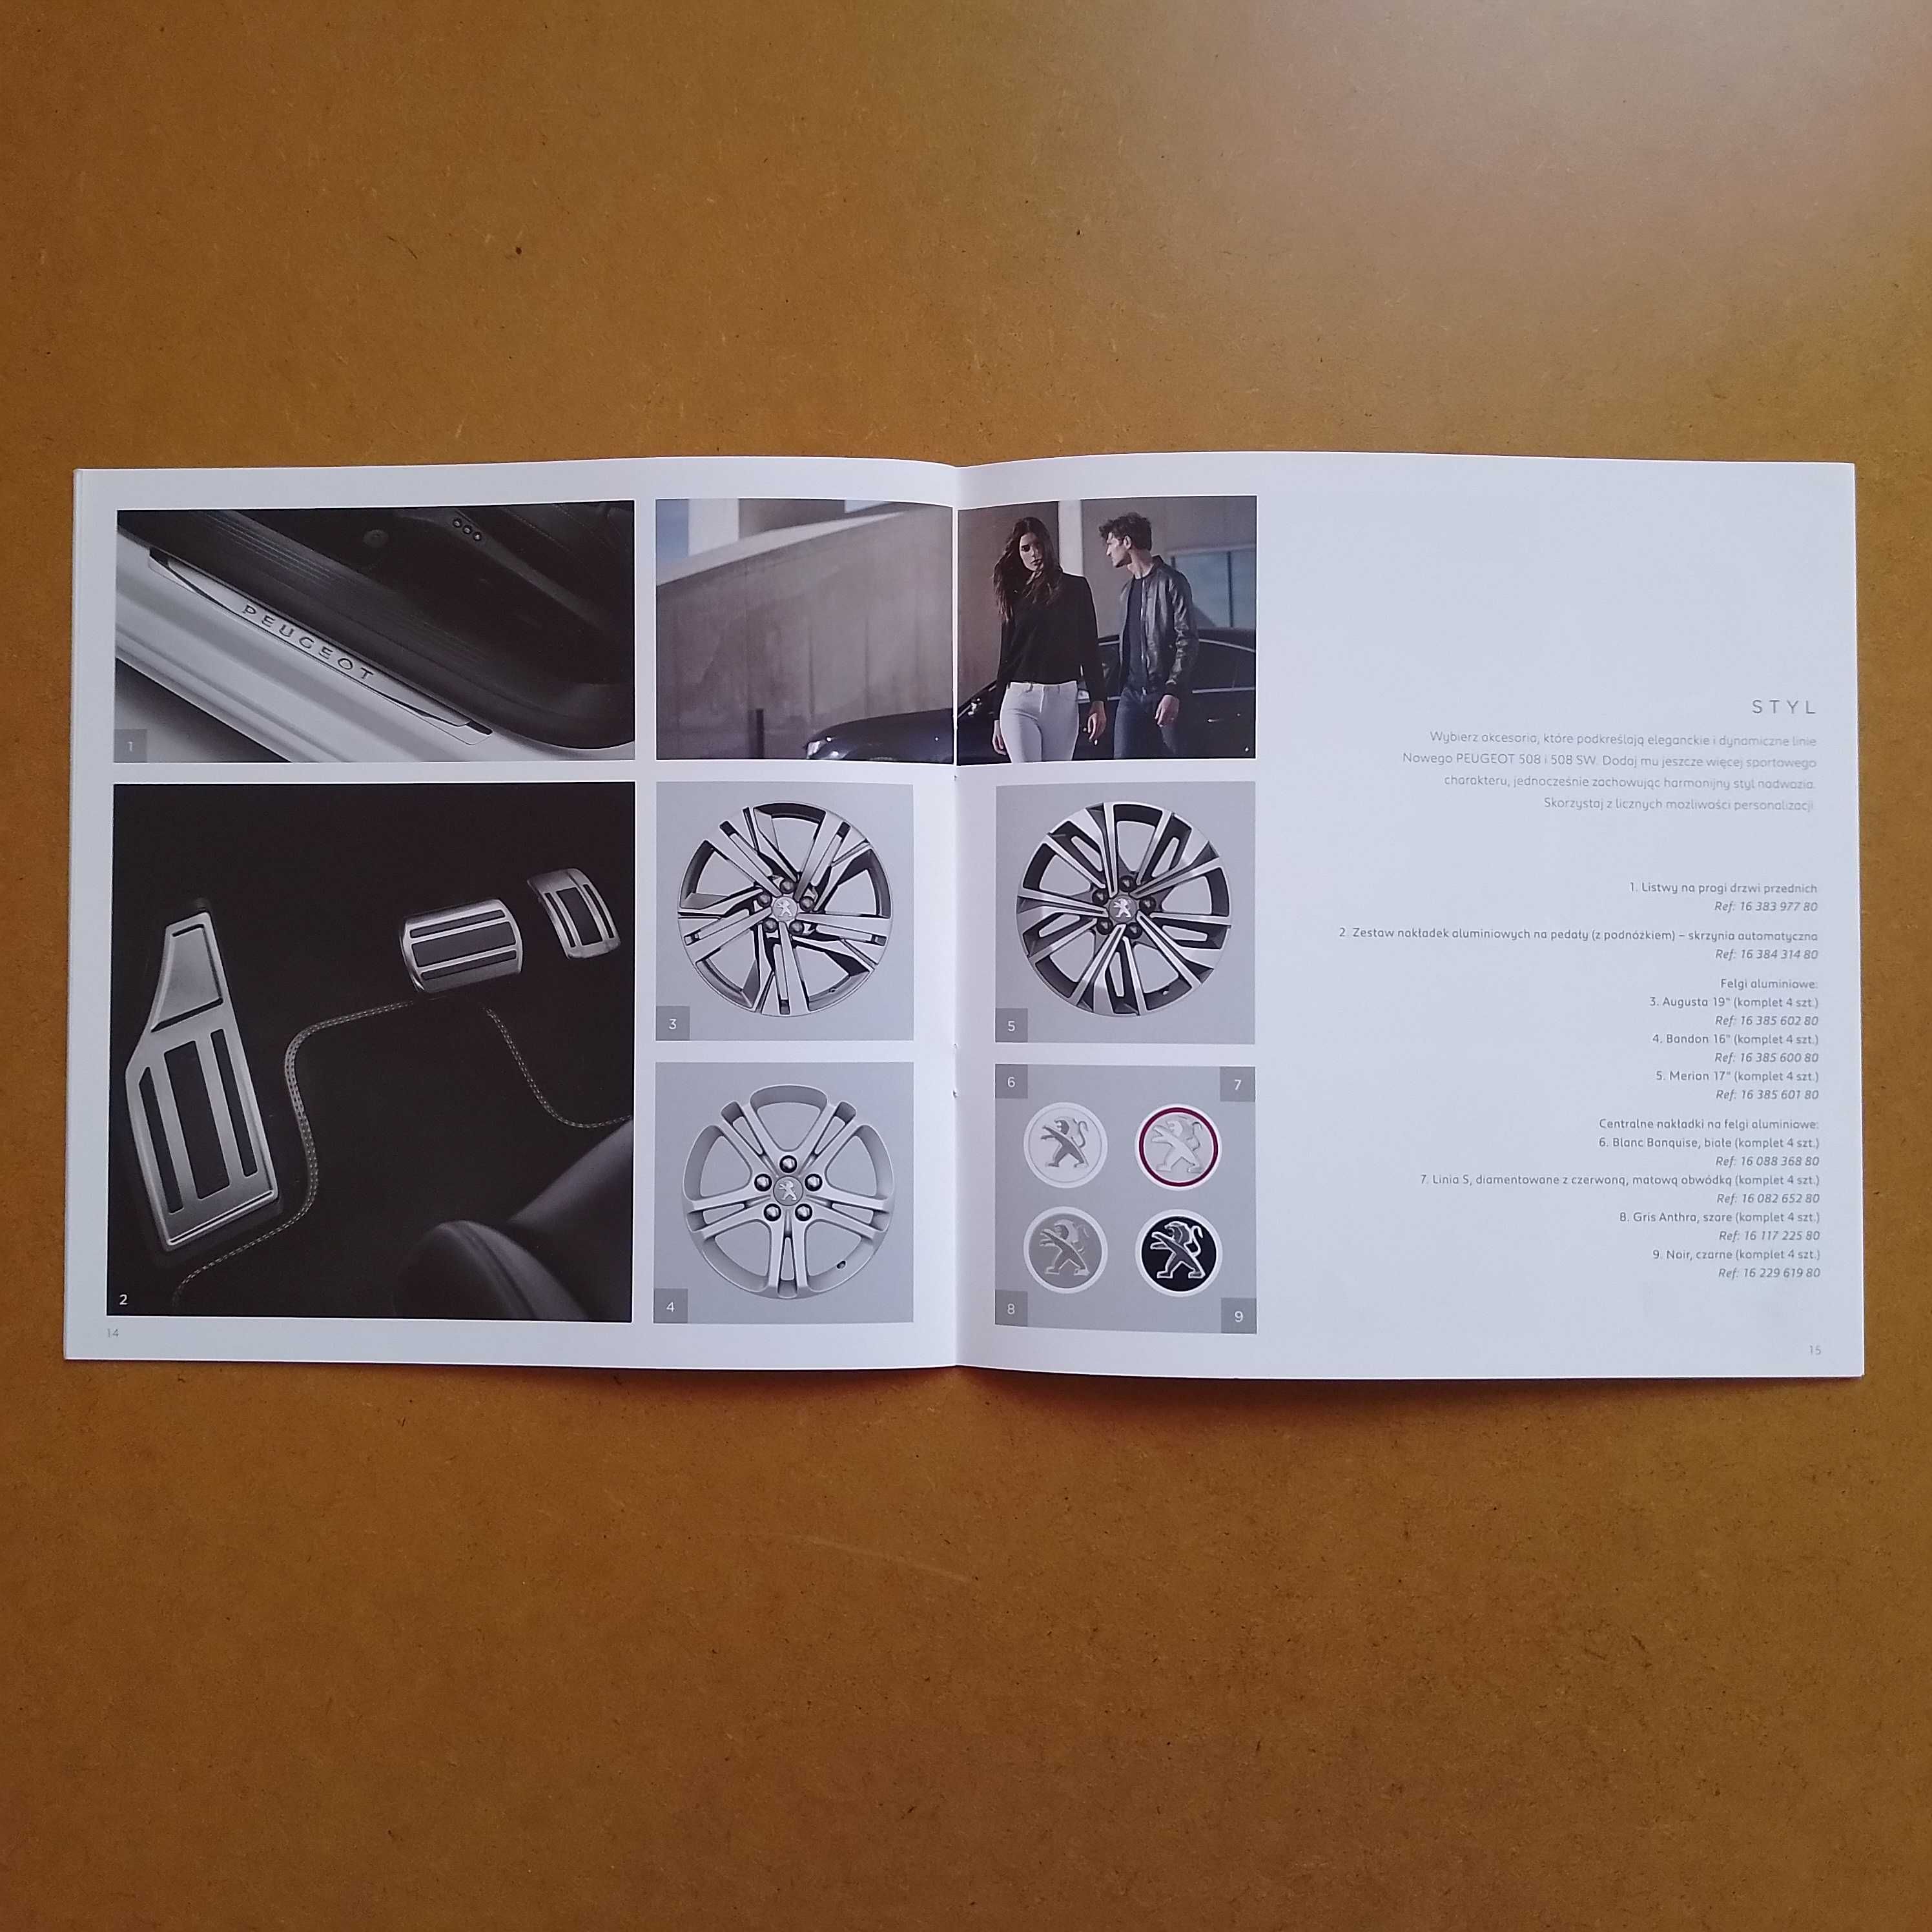 Prospekt, folder, broszura, katalog akcesoria Peugeot 508, 508 SW